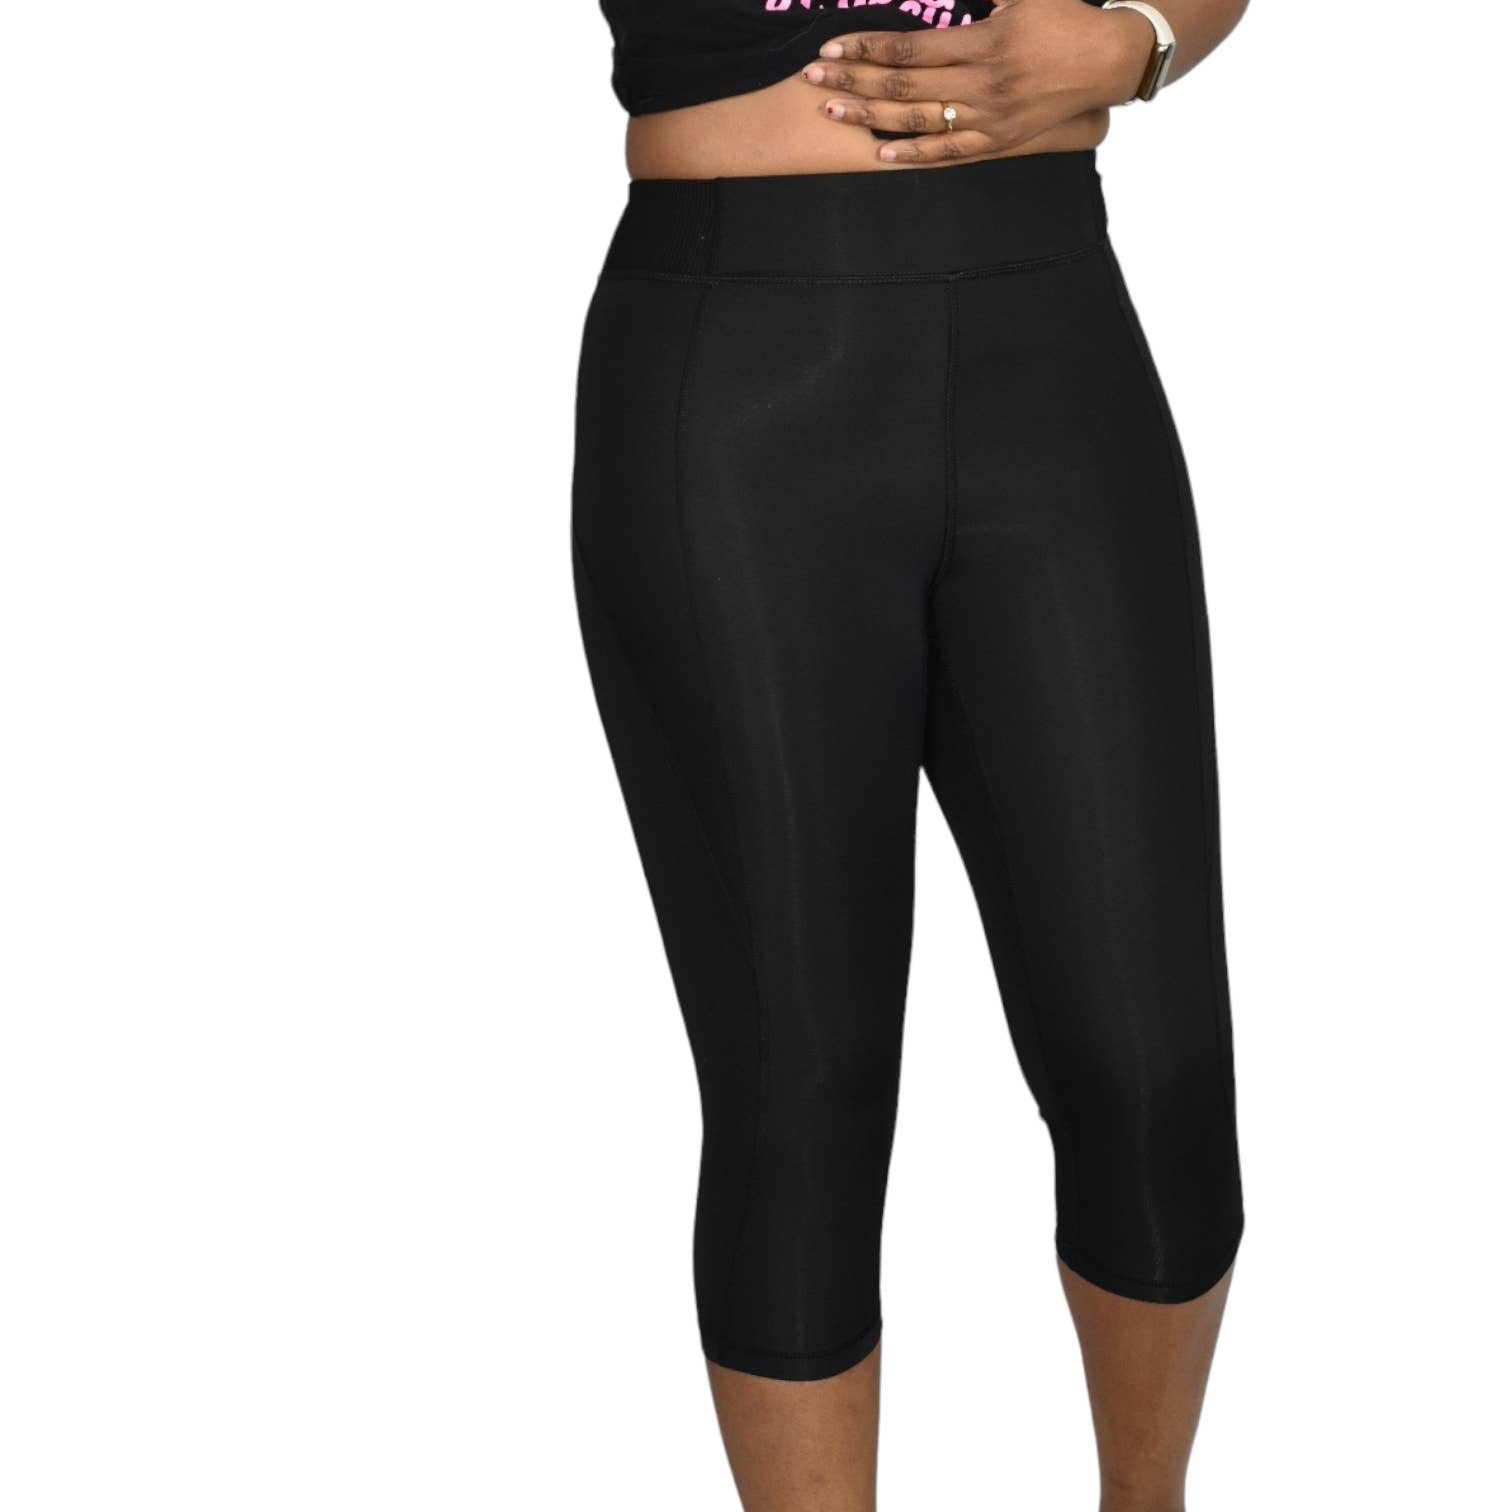 Ivy Park Capri Legging High Waist Black Sculptured Beyonce Activewear Size Small